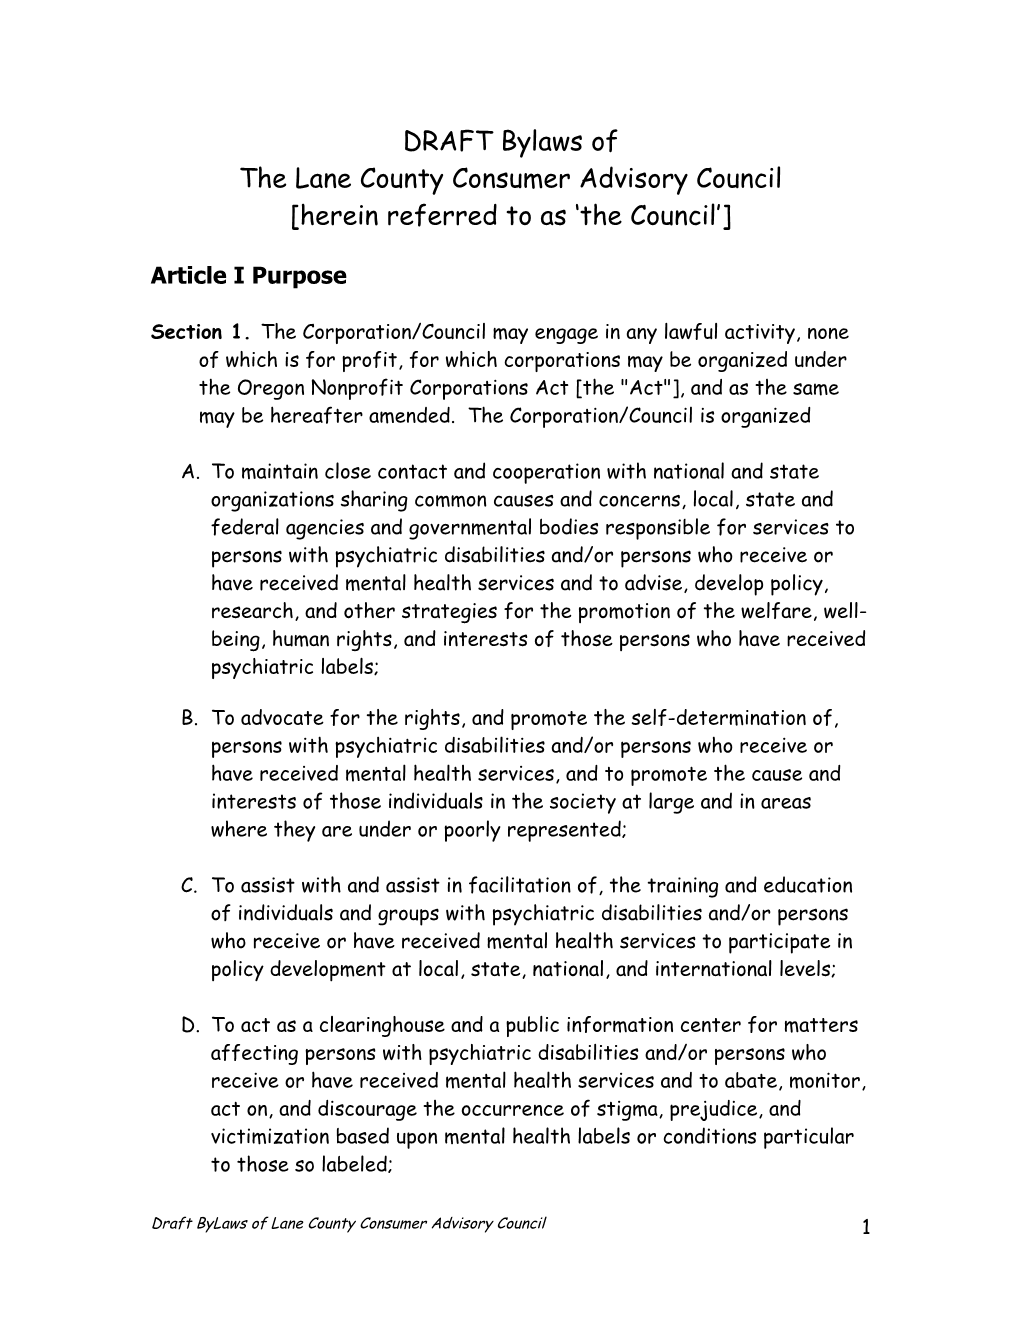 The Lane County Consumer Advisory Council